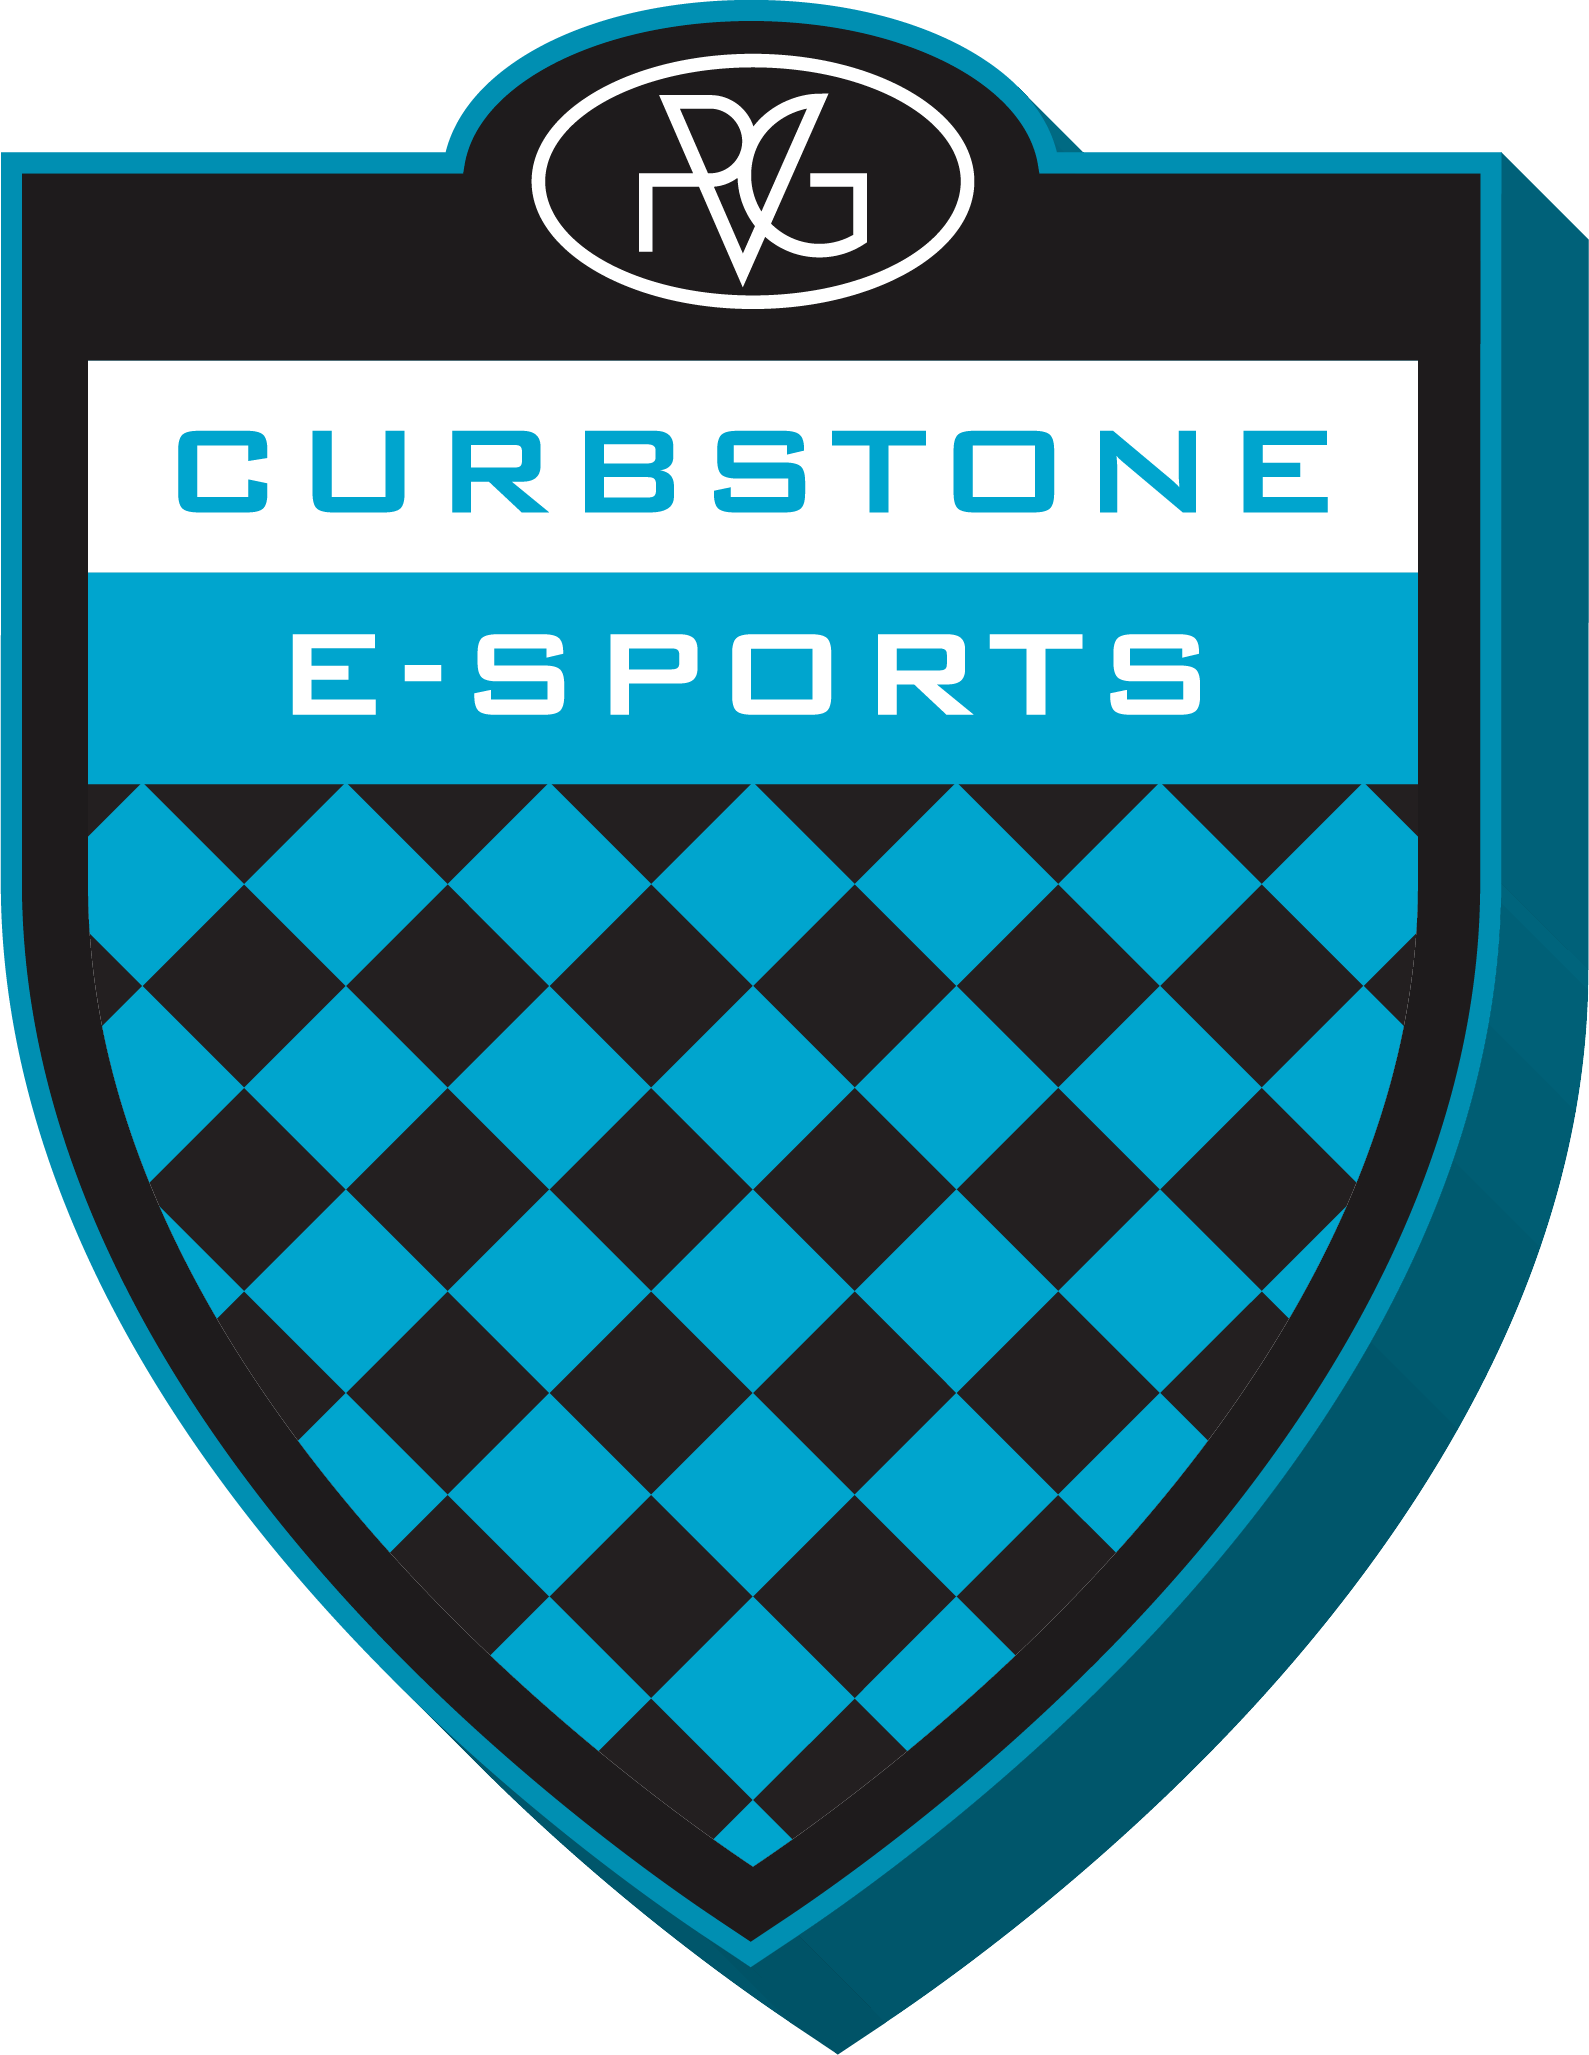 Curbstone E-Sports